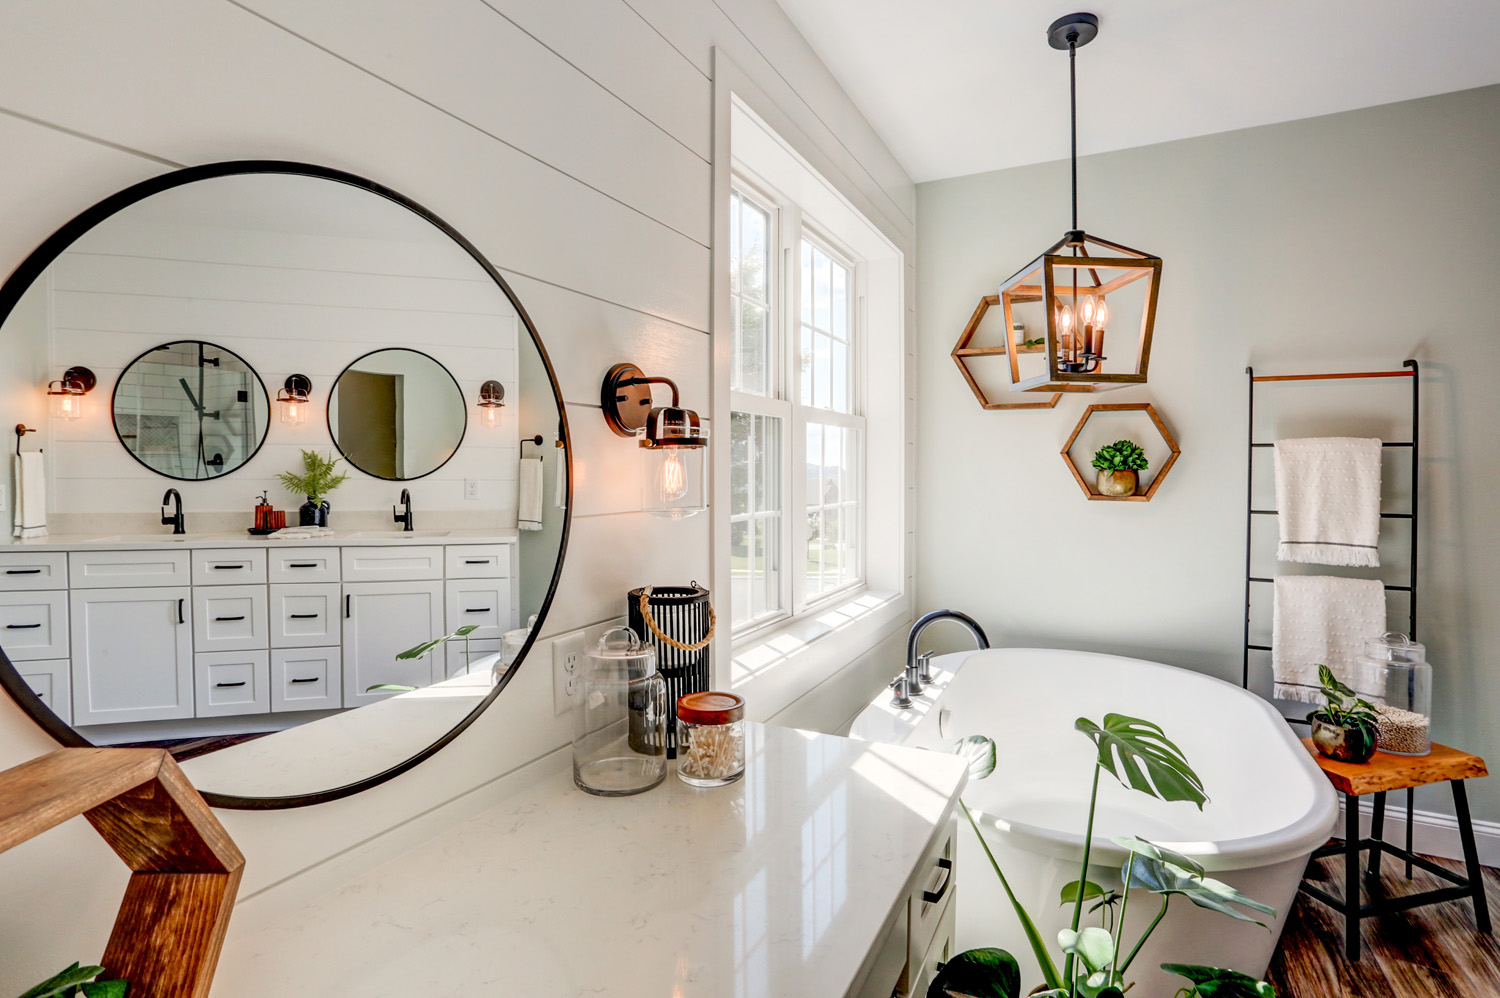 Circular mirror with matte black accents in Landisville Master Bathroom Remodel